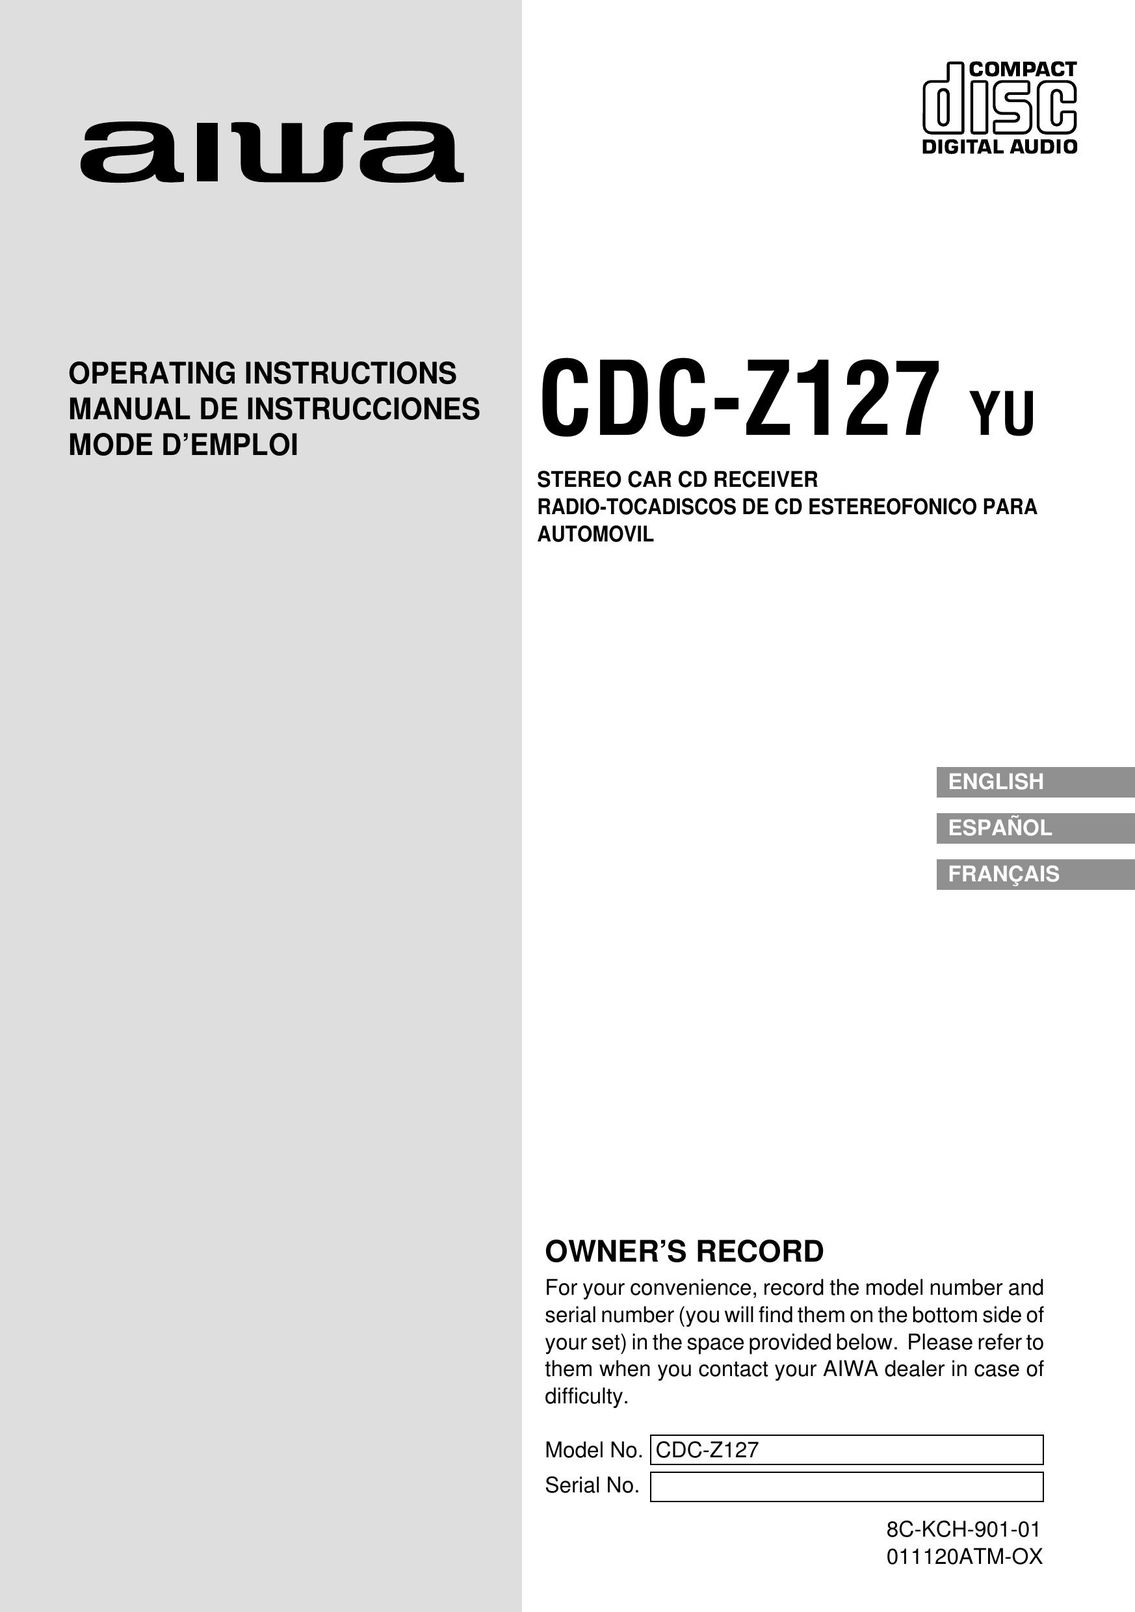 Aiwa CDC-Z127 Car Stereo System User Manual